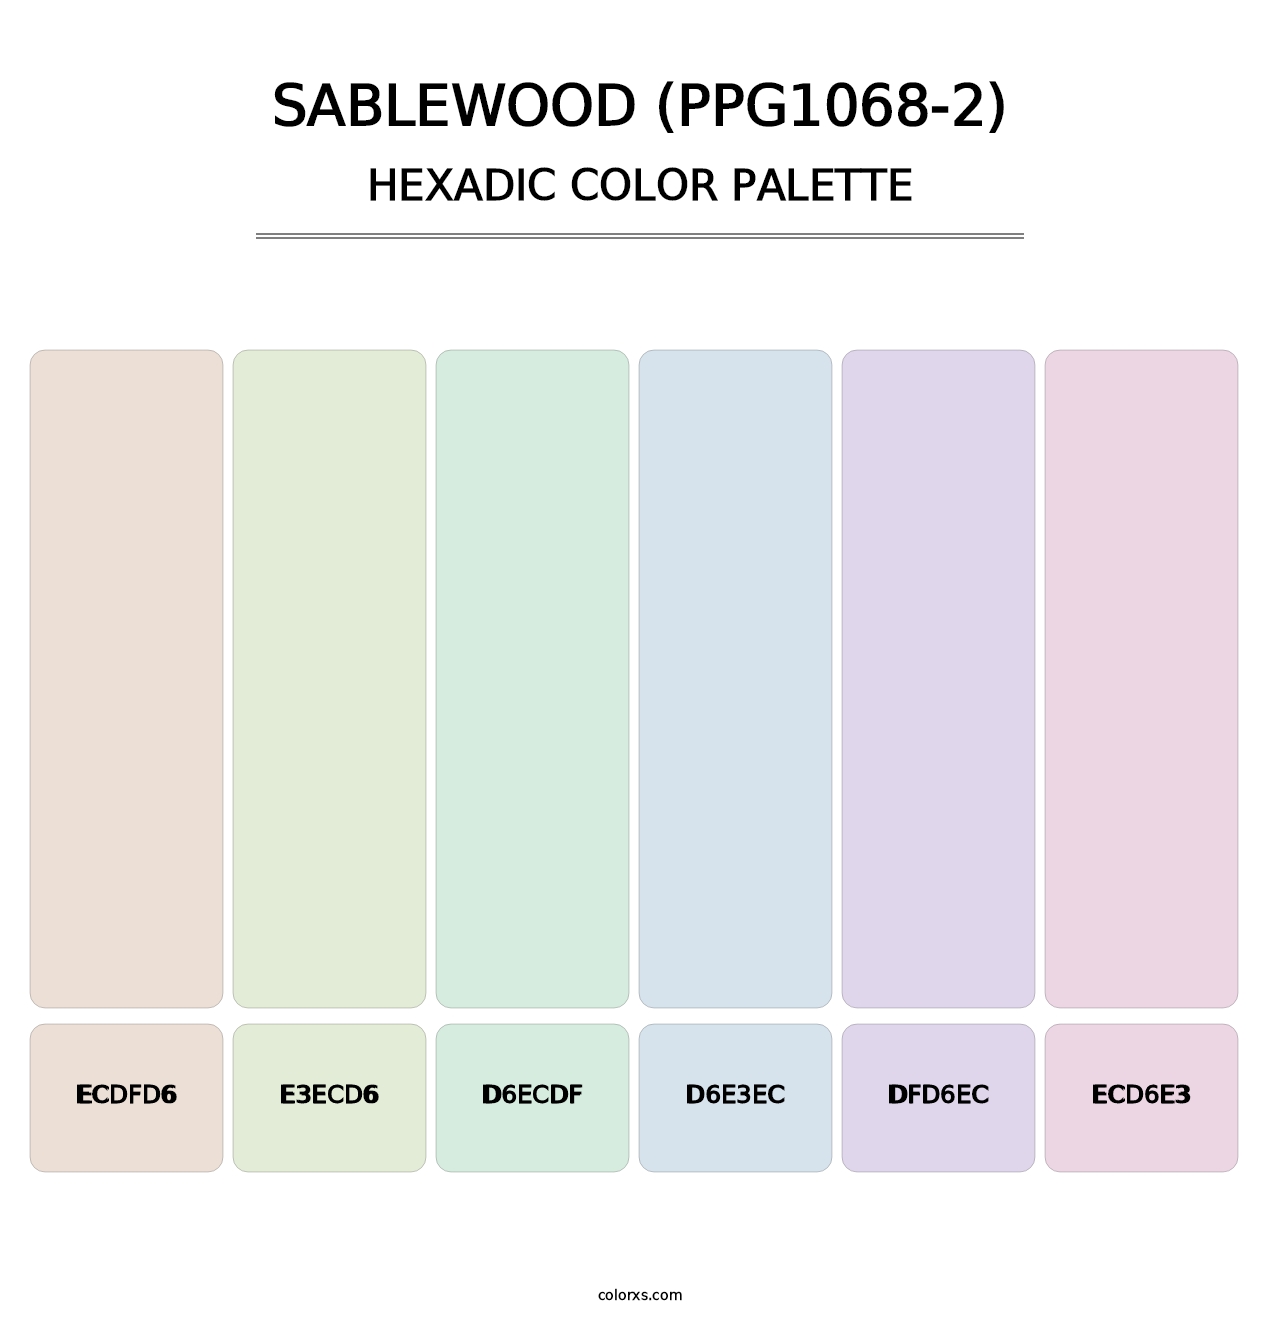 Sablewood (PPG1068-2) - Hexadic Color Palette